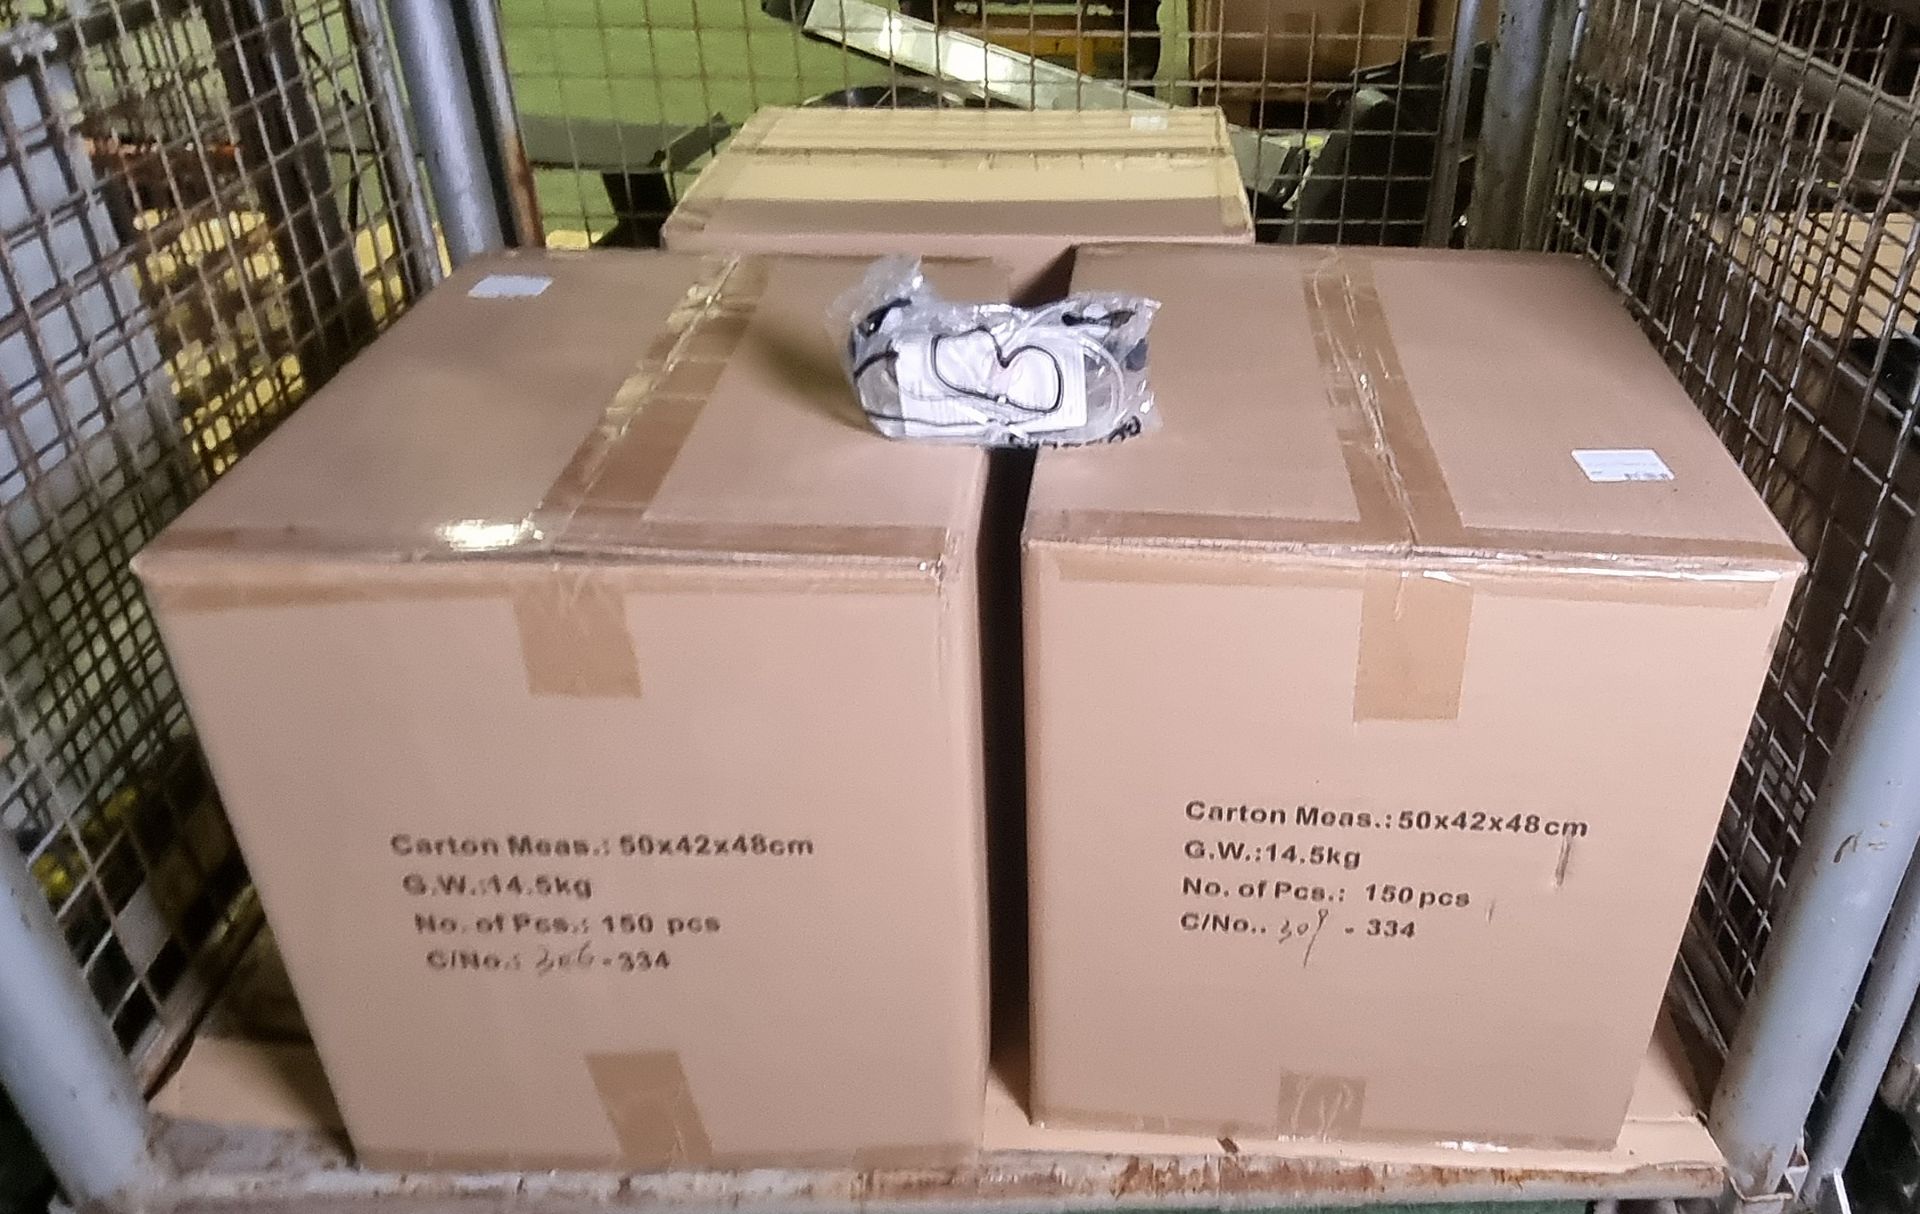 3x boxes of TapMedic LLC goggles - 150 pairs per box